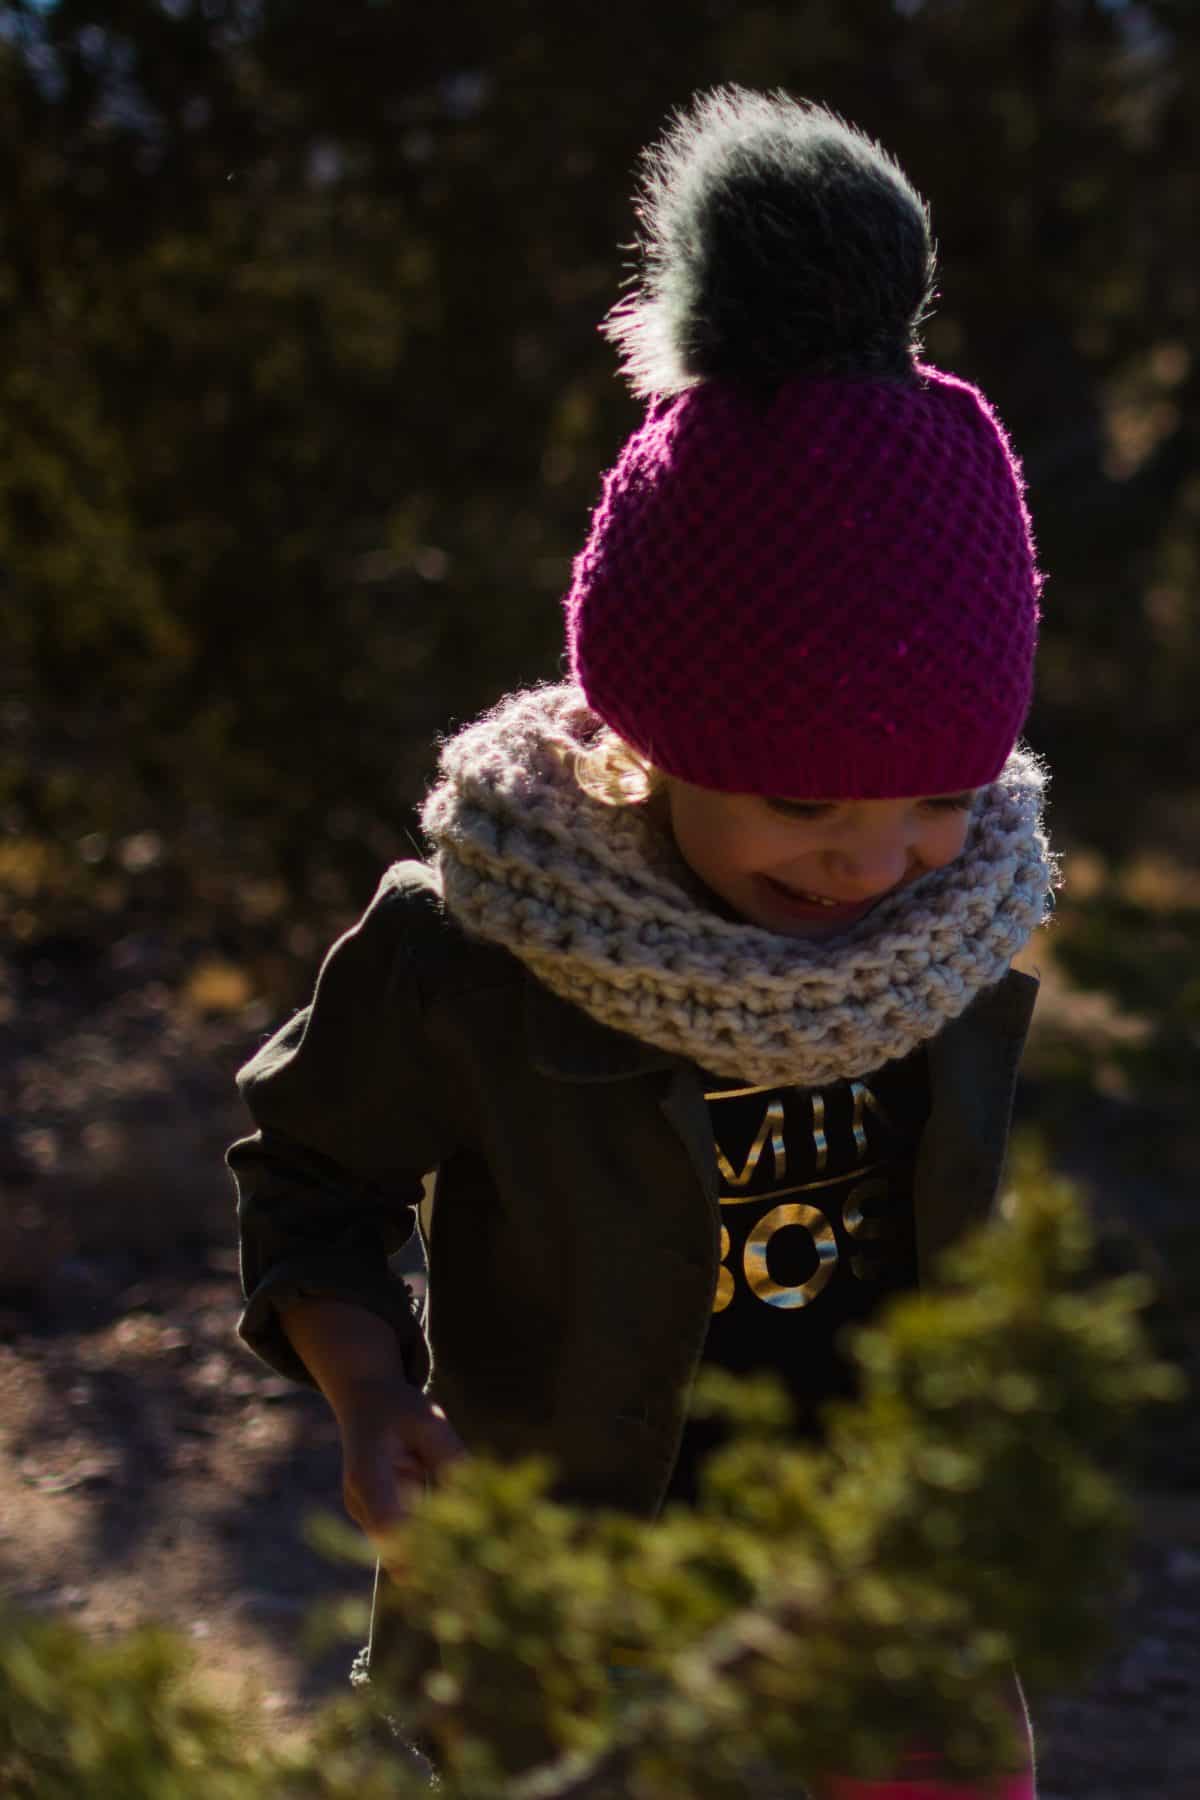 Hiking Galisteo Basin Preserve Santa Fe with Kids